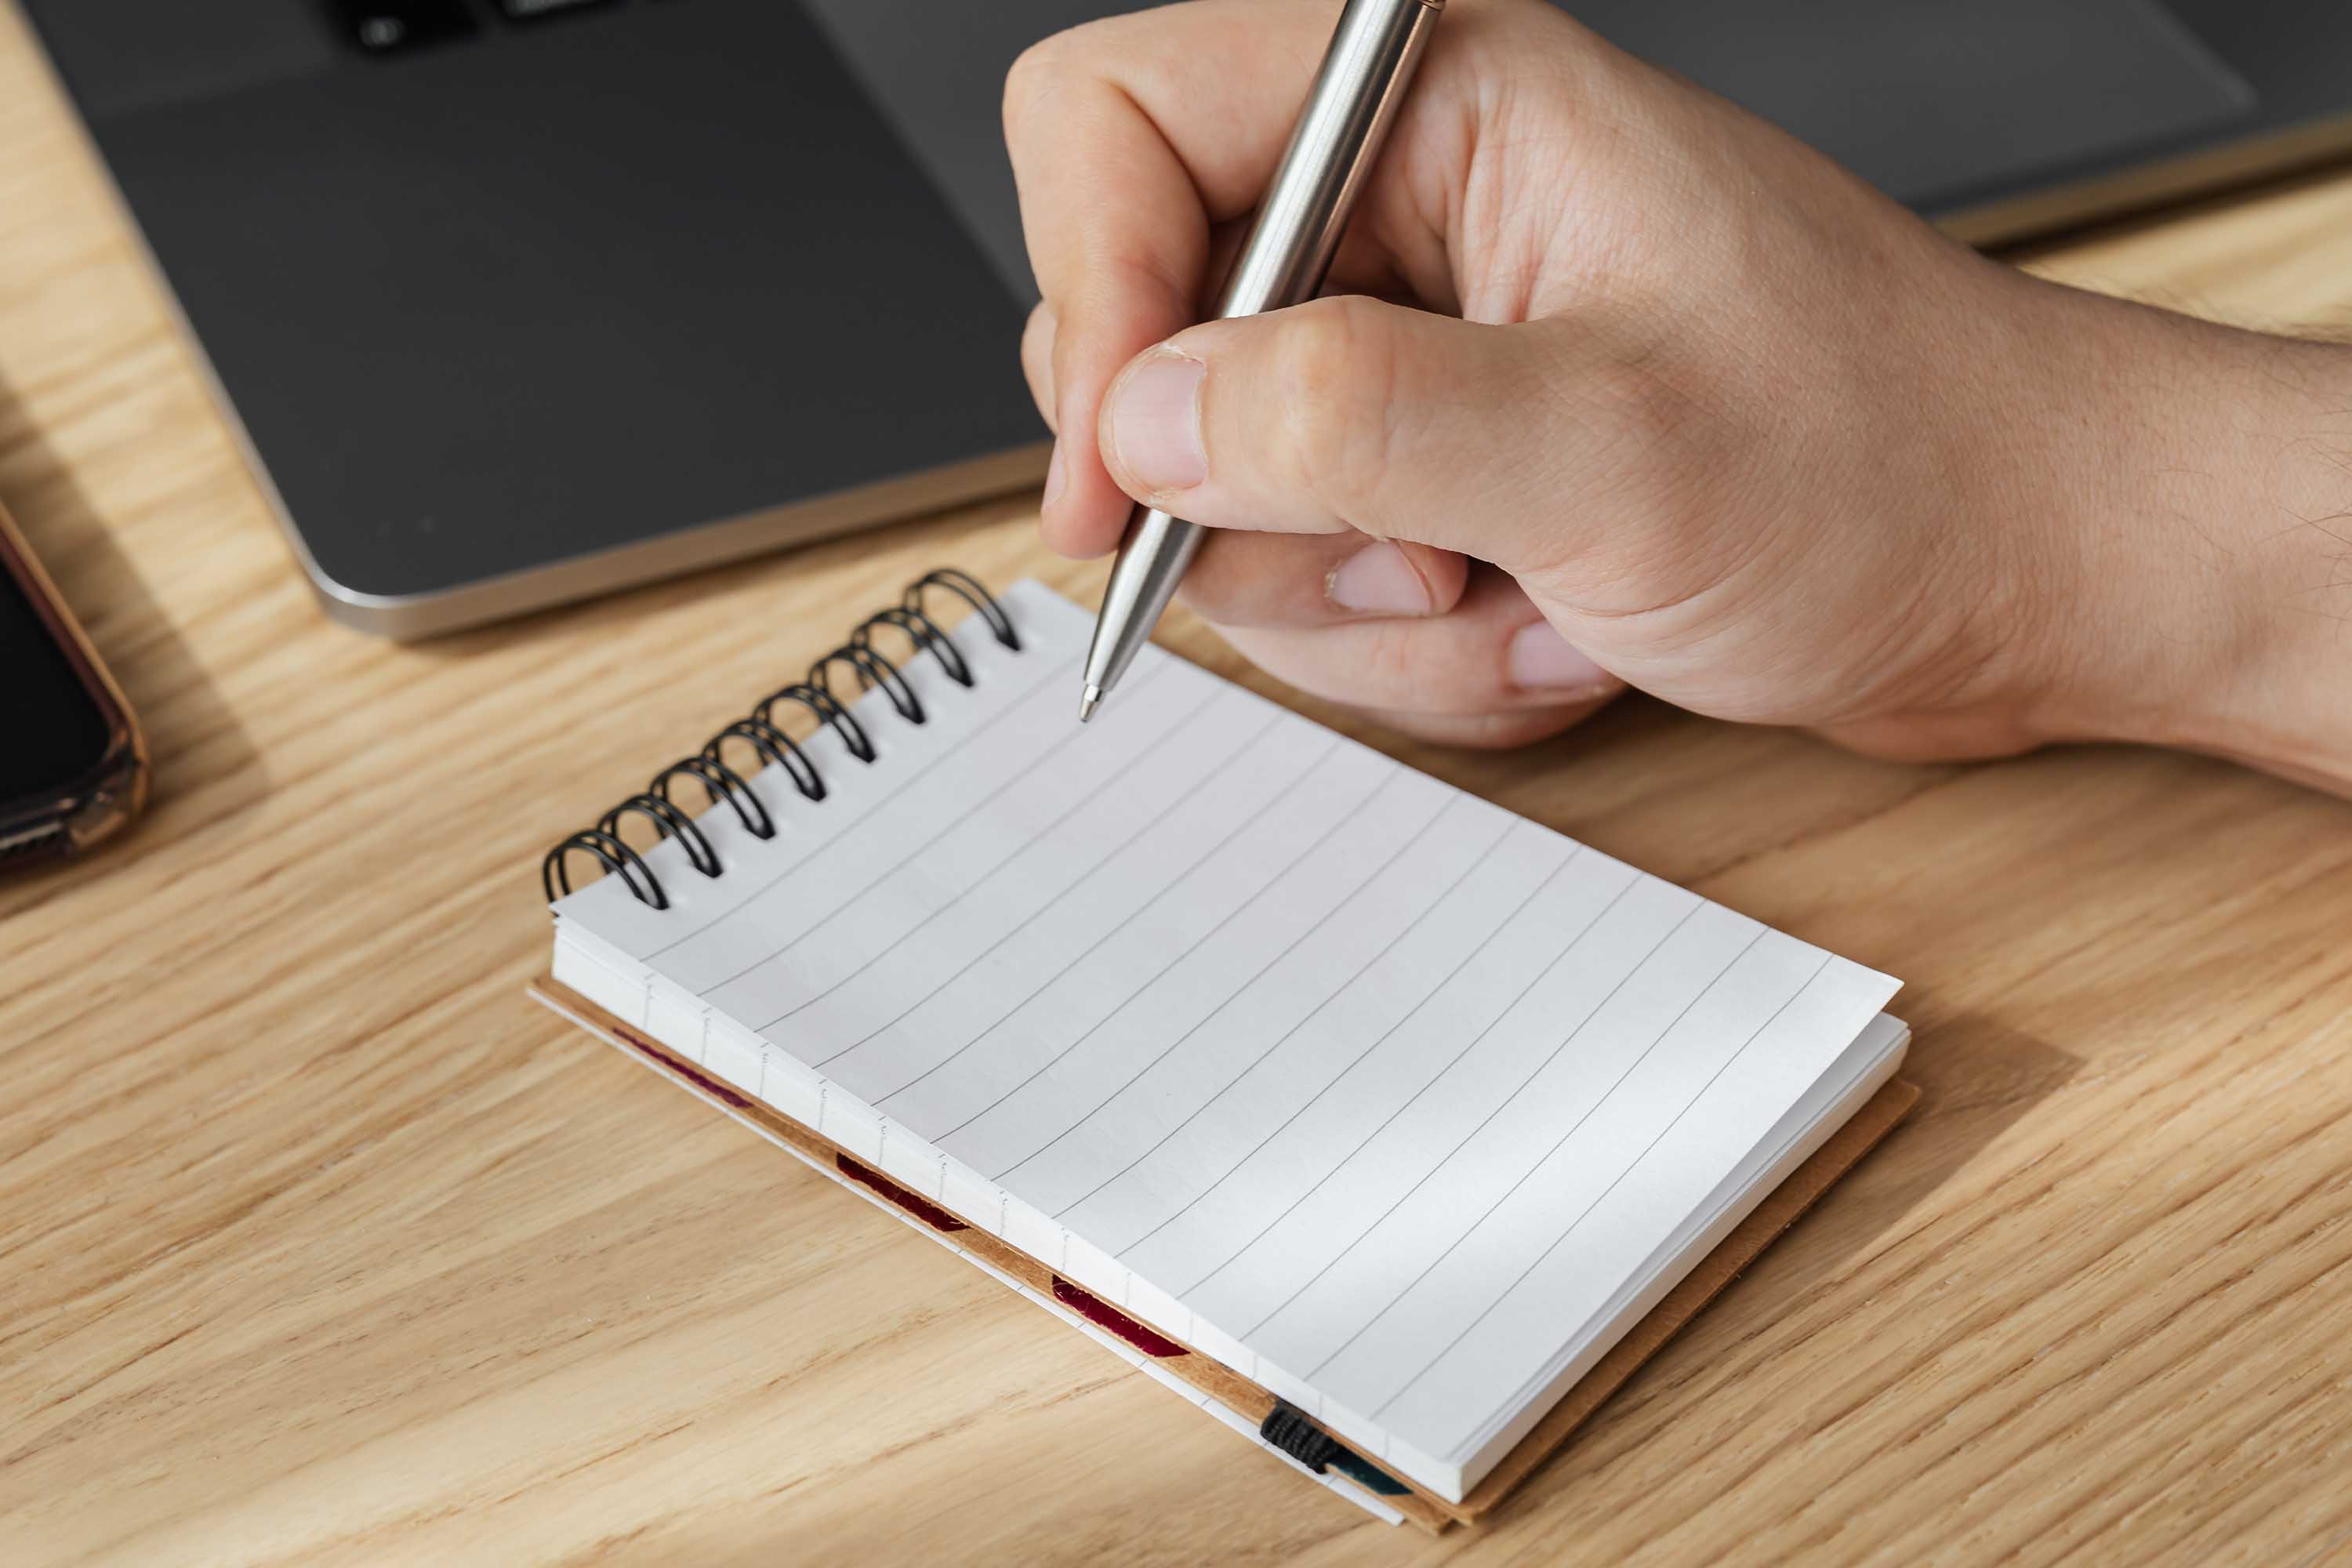 A hand holding a pen over a notebook